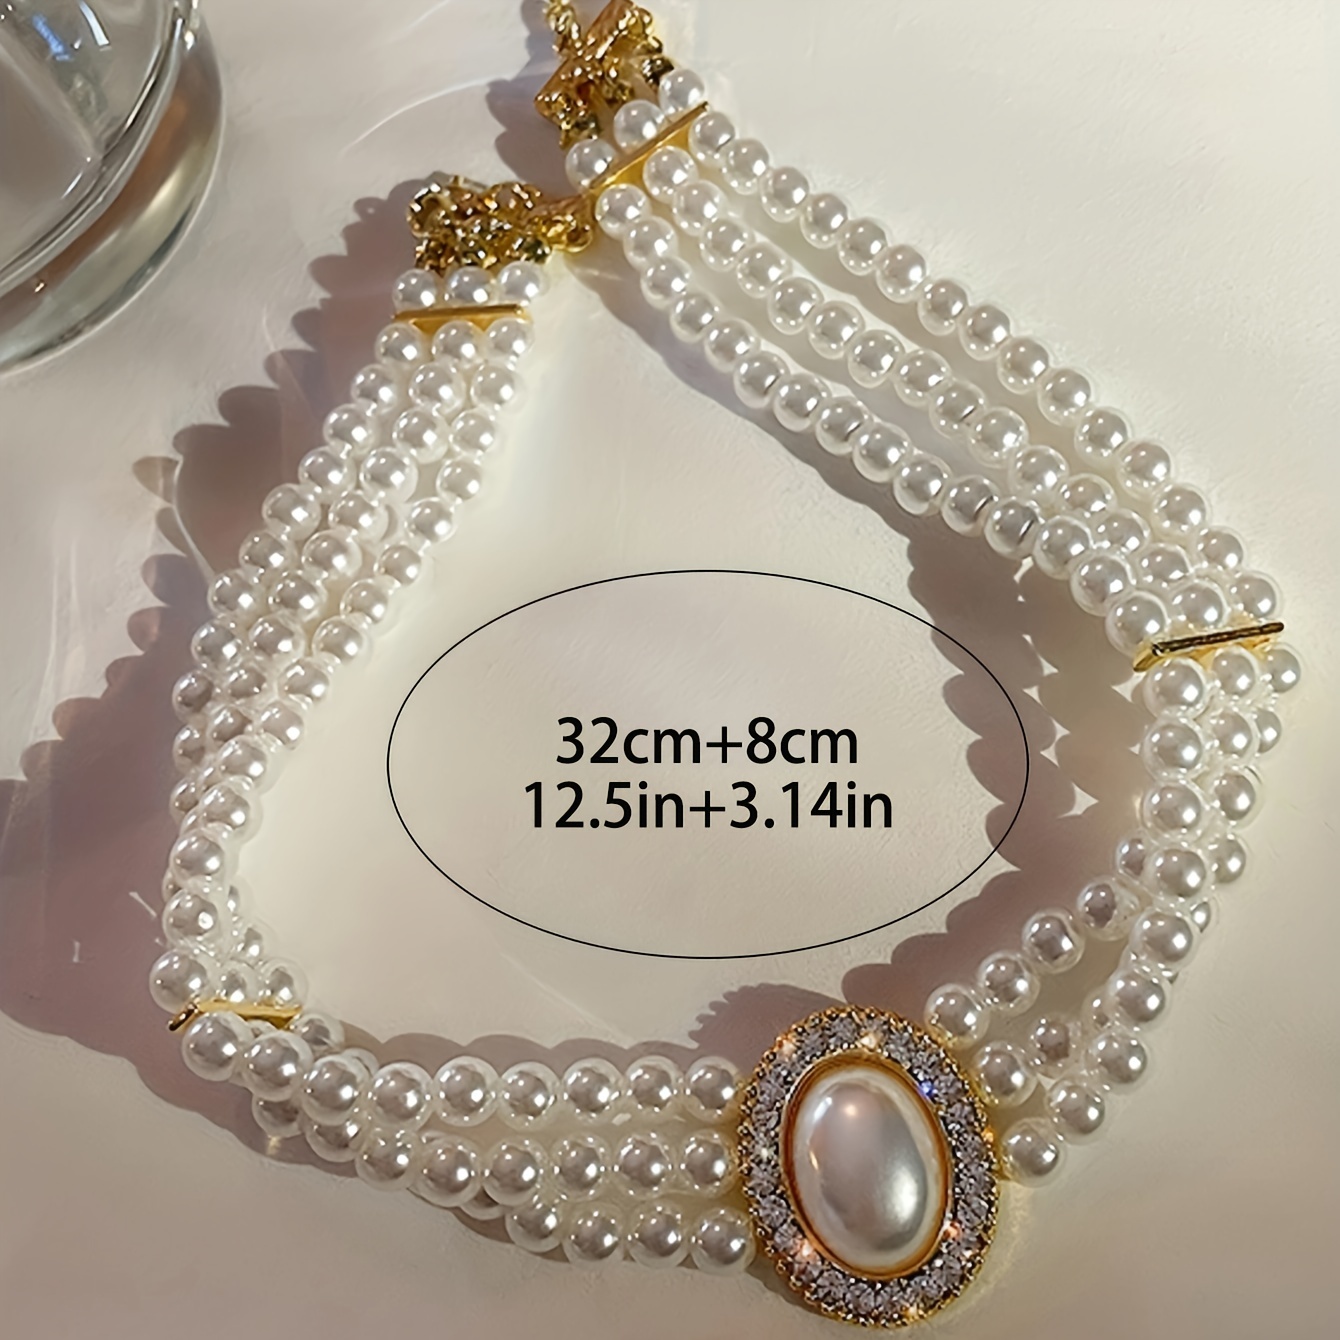 1pc elegant vintage choker necklace inlaid shiny rhinestones elegant neck jewelry decor for men and women